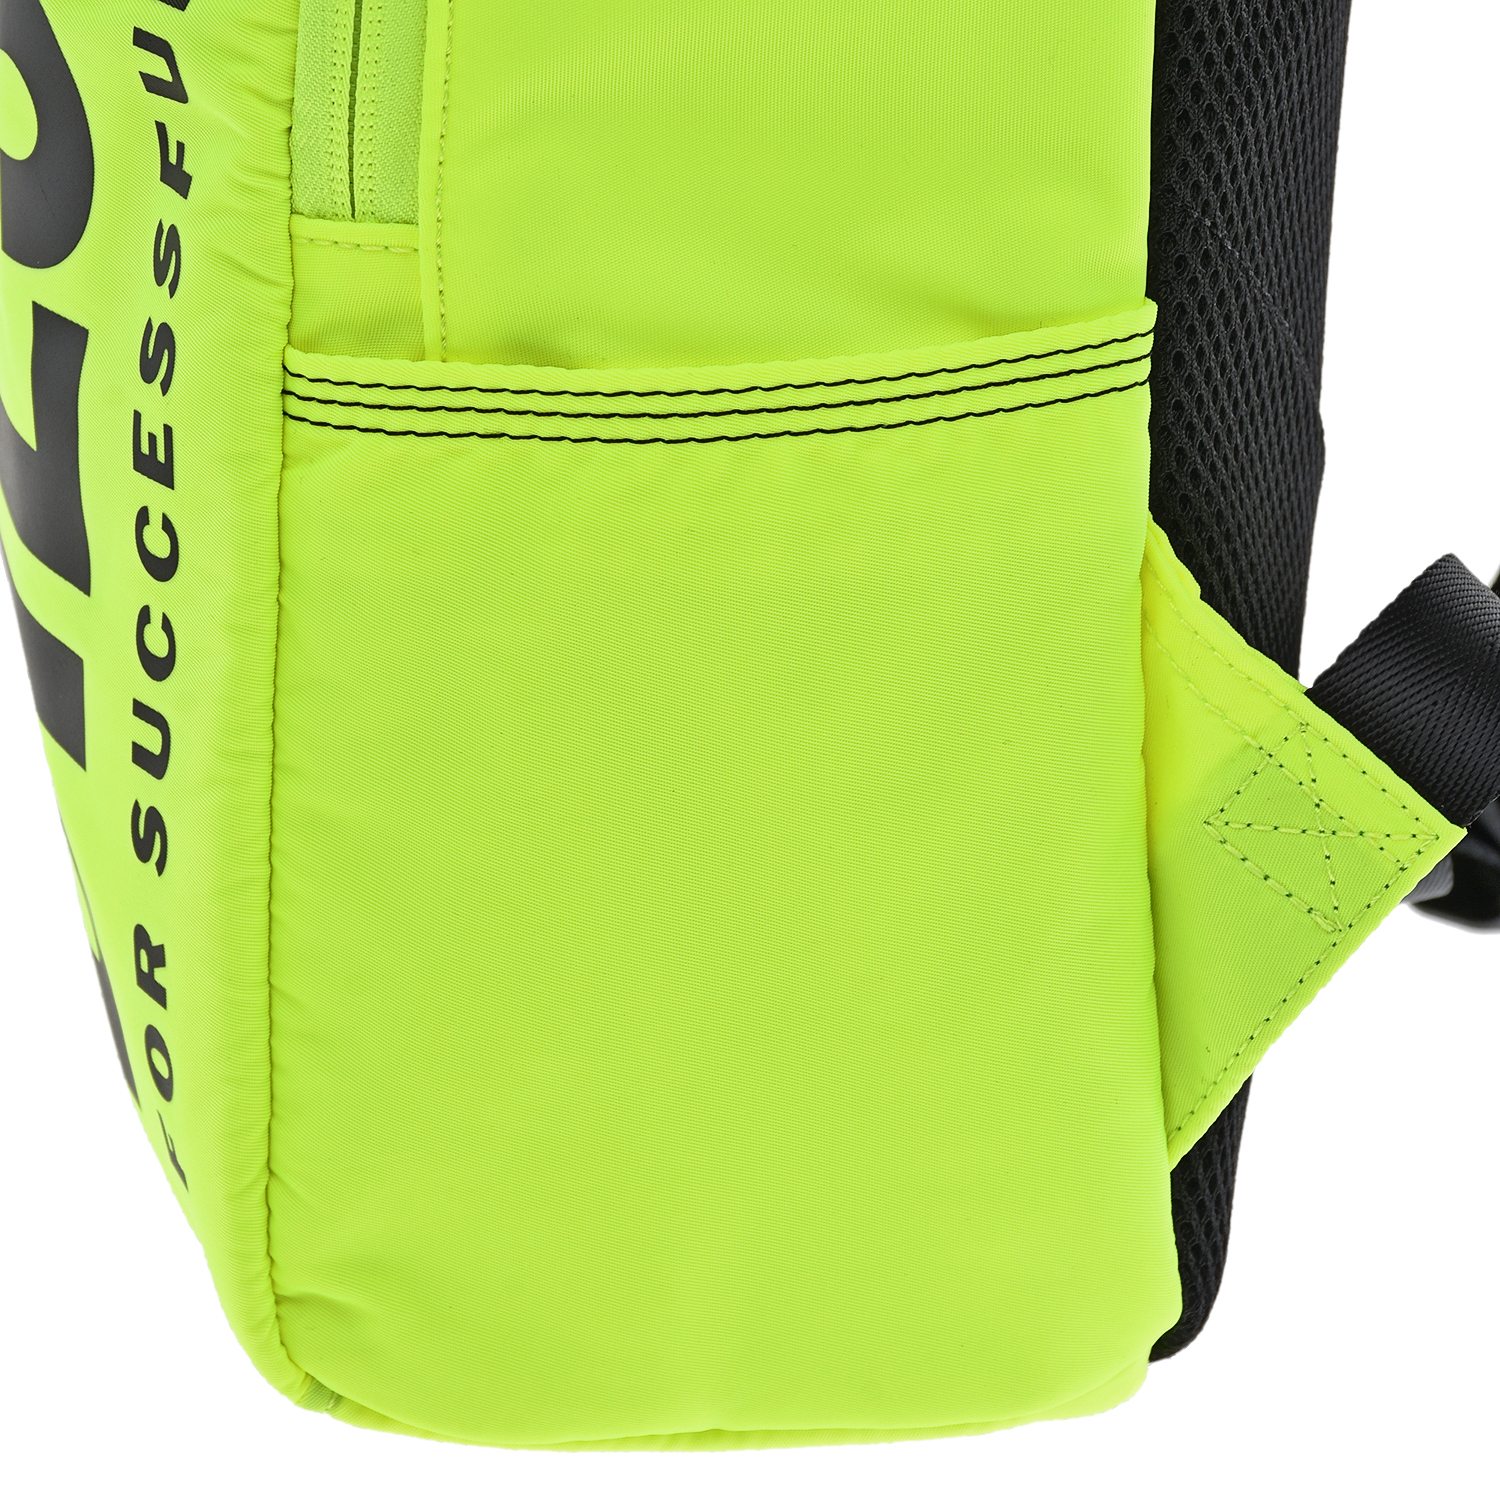 Неоново-желтый рюкзак, 25х11х40 см Diesel детское, размер unica - фото 4